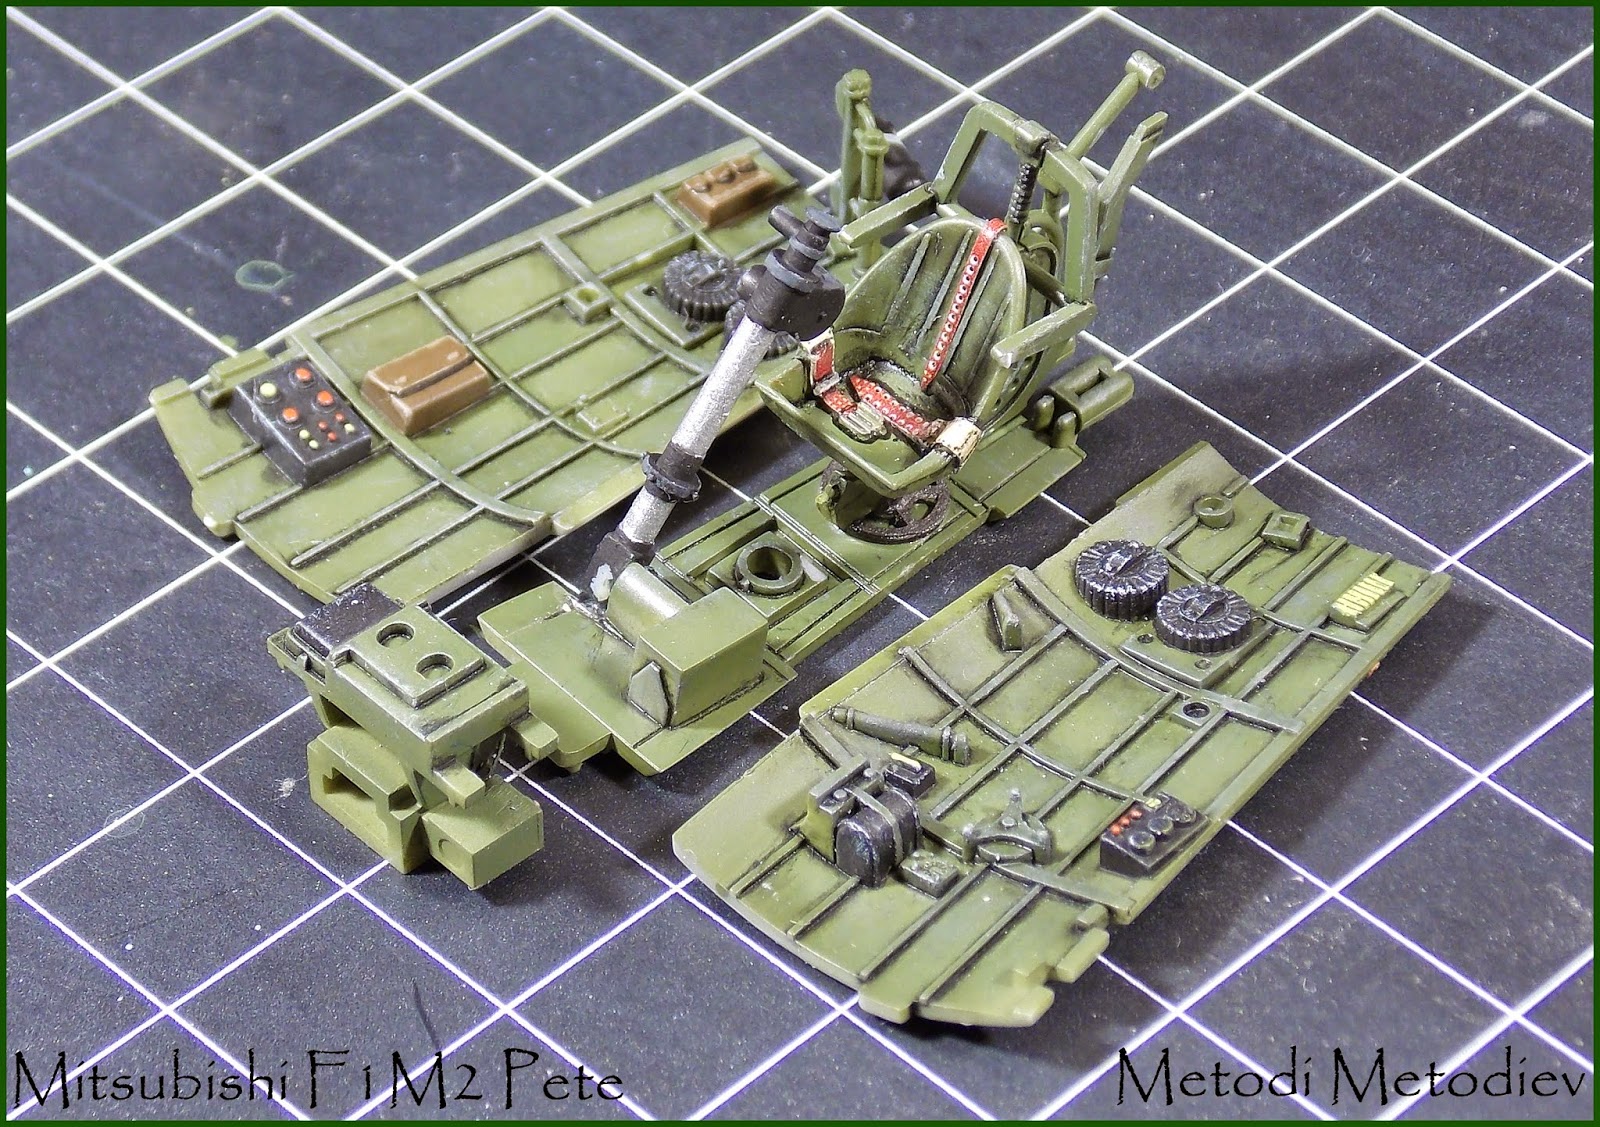 IJN Mitsubishy F1M2 Pete - Hasegawa 1:48 scale model